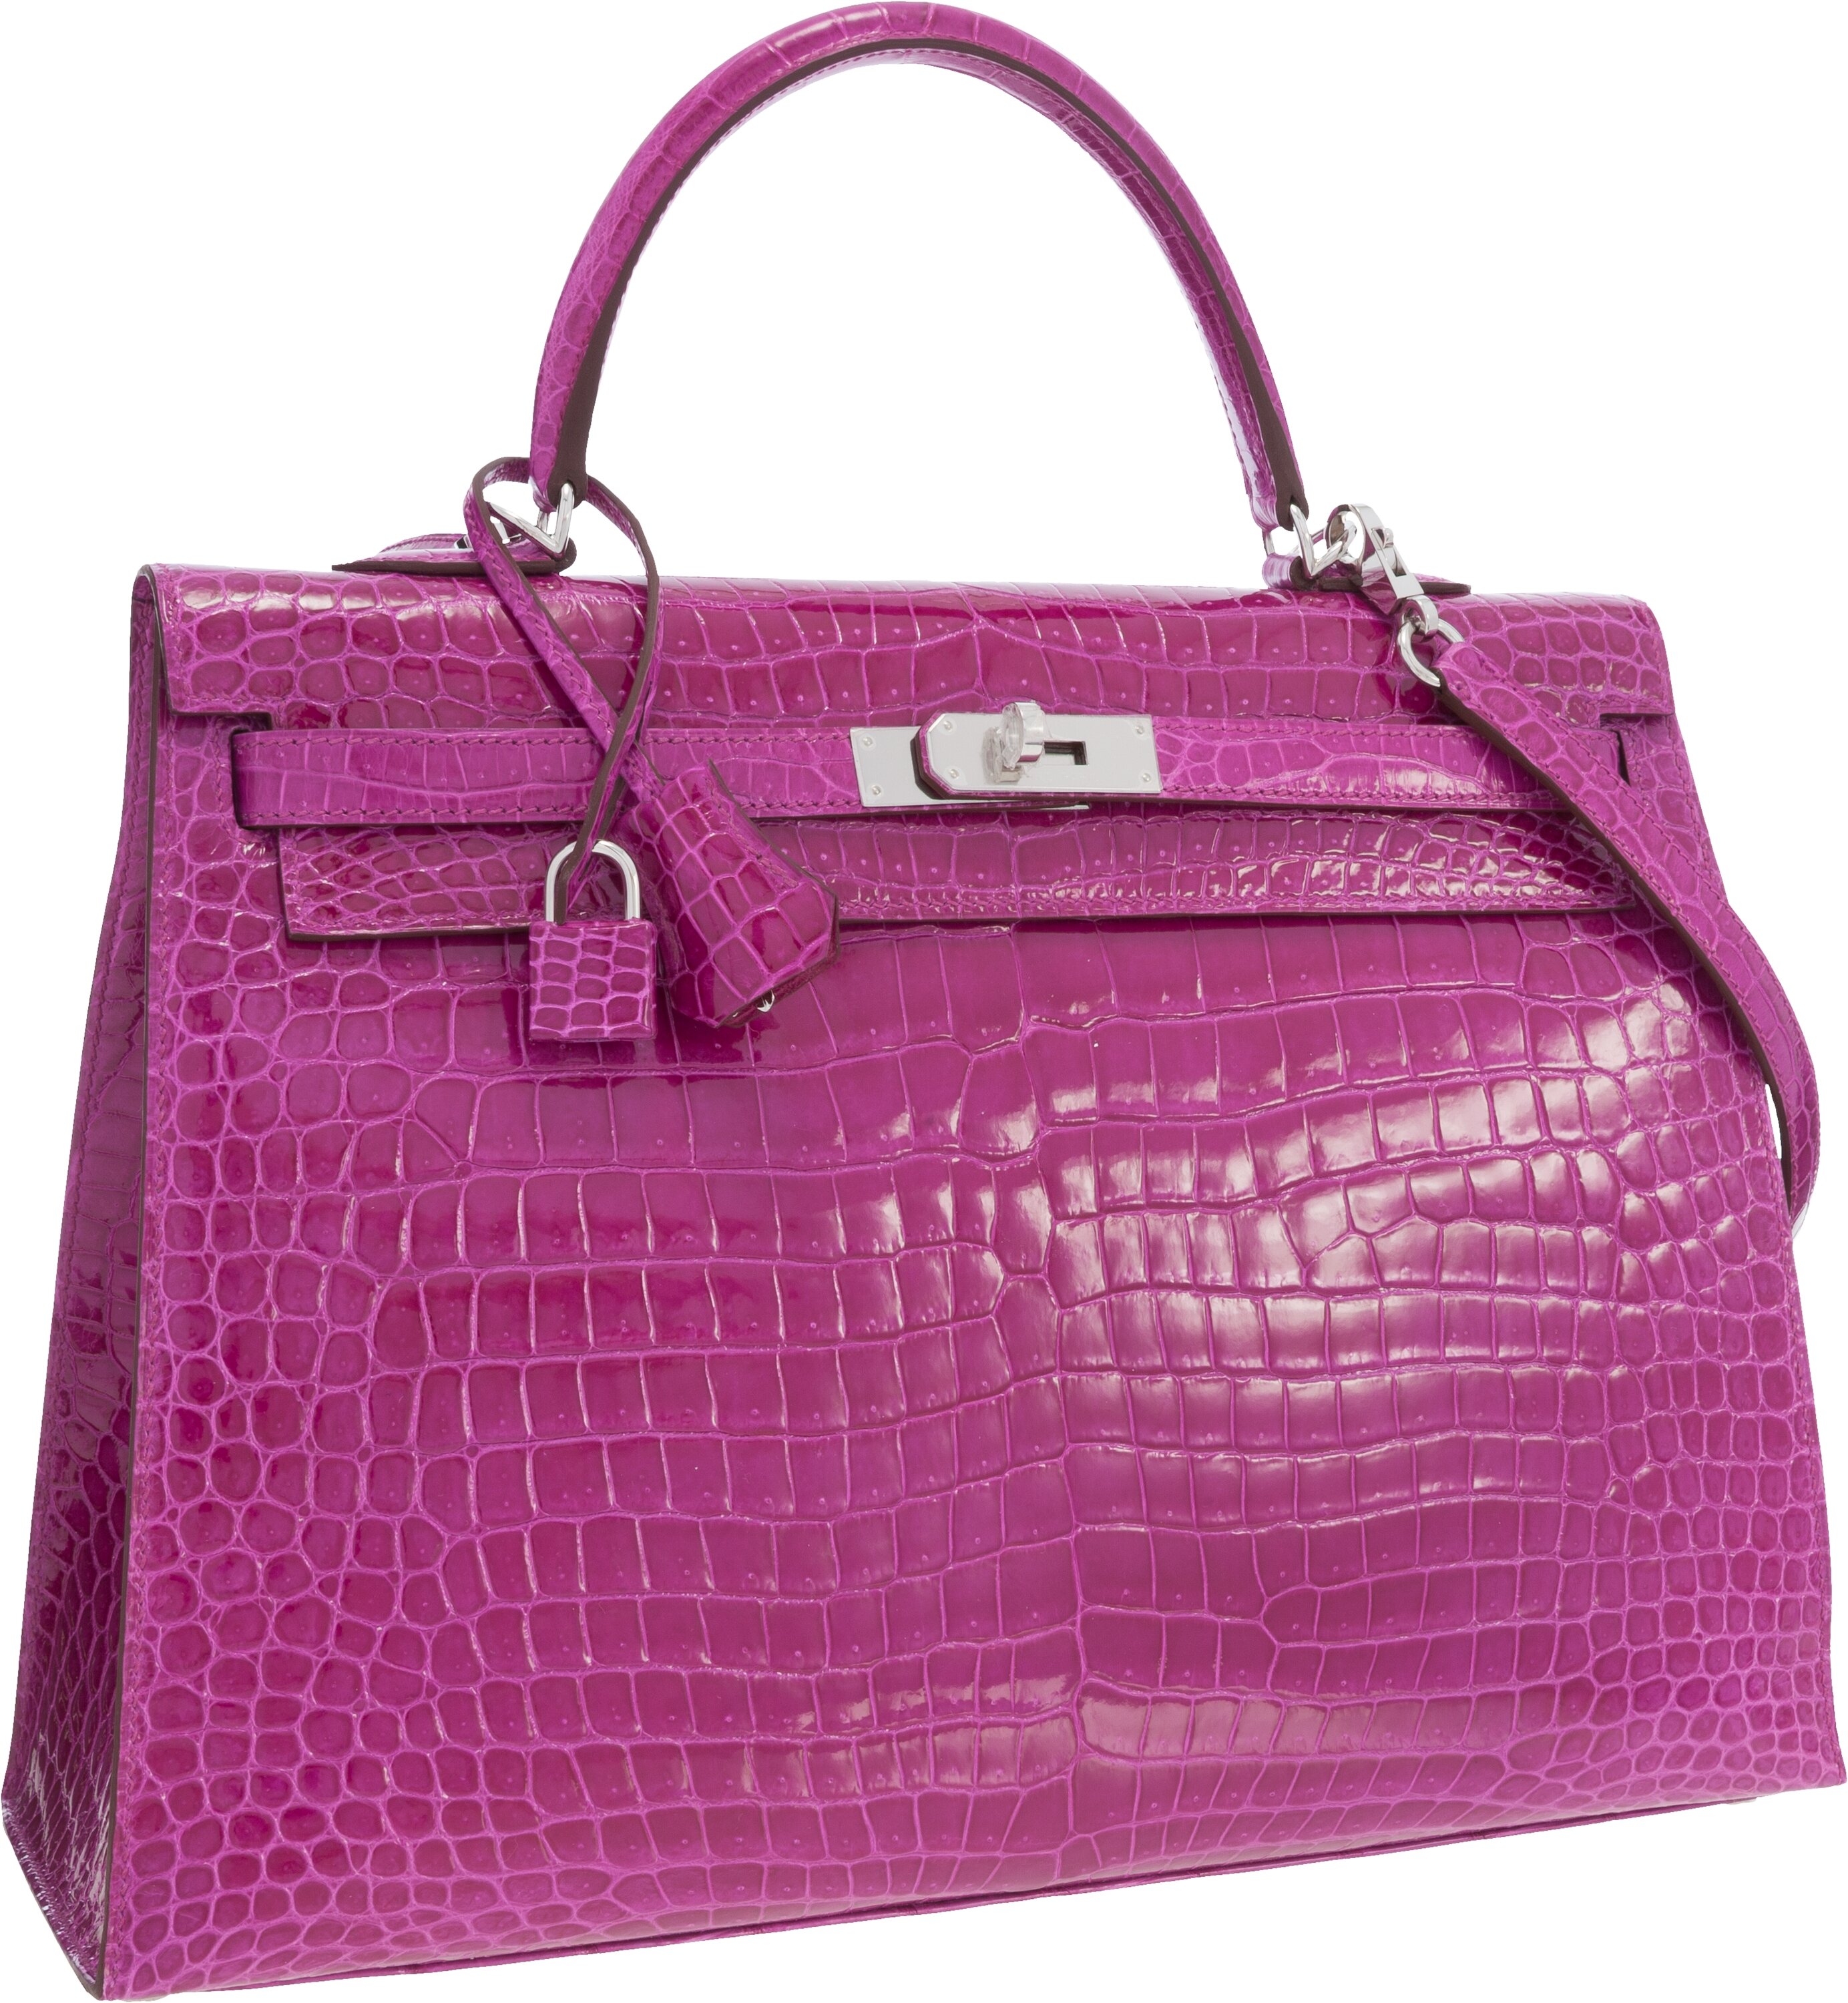 Hermes 35cm Shiny Violet Porosus Crocodile Birkin Bag with